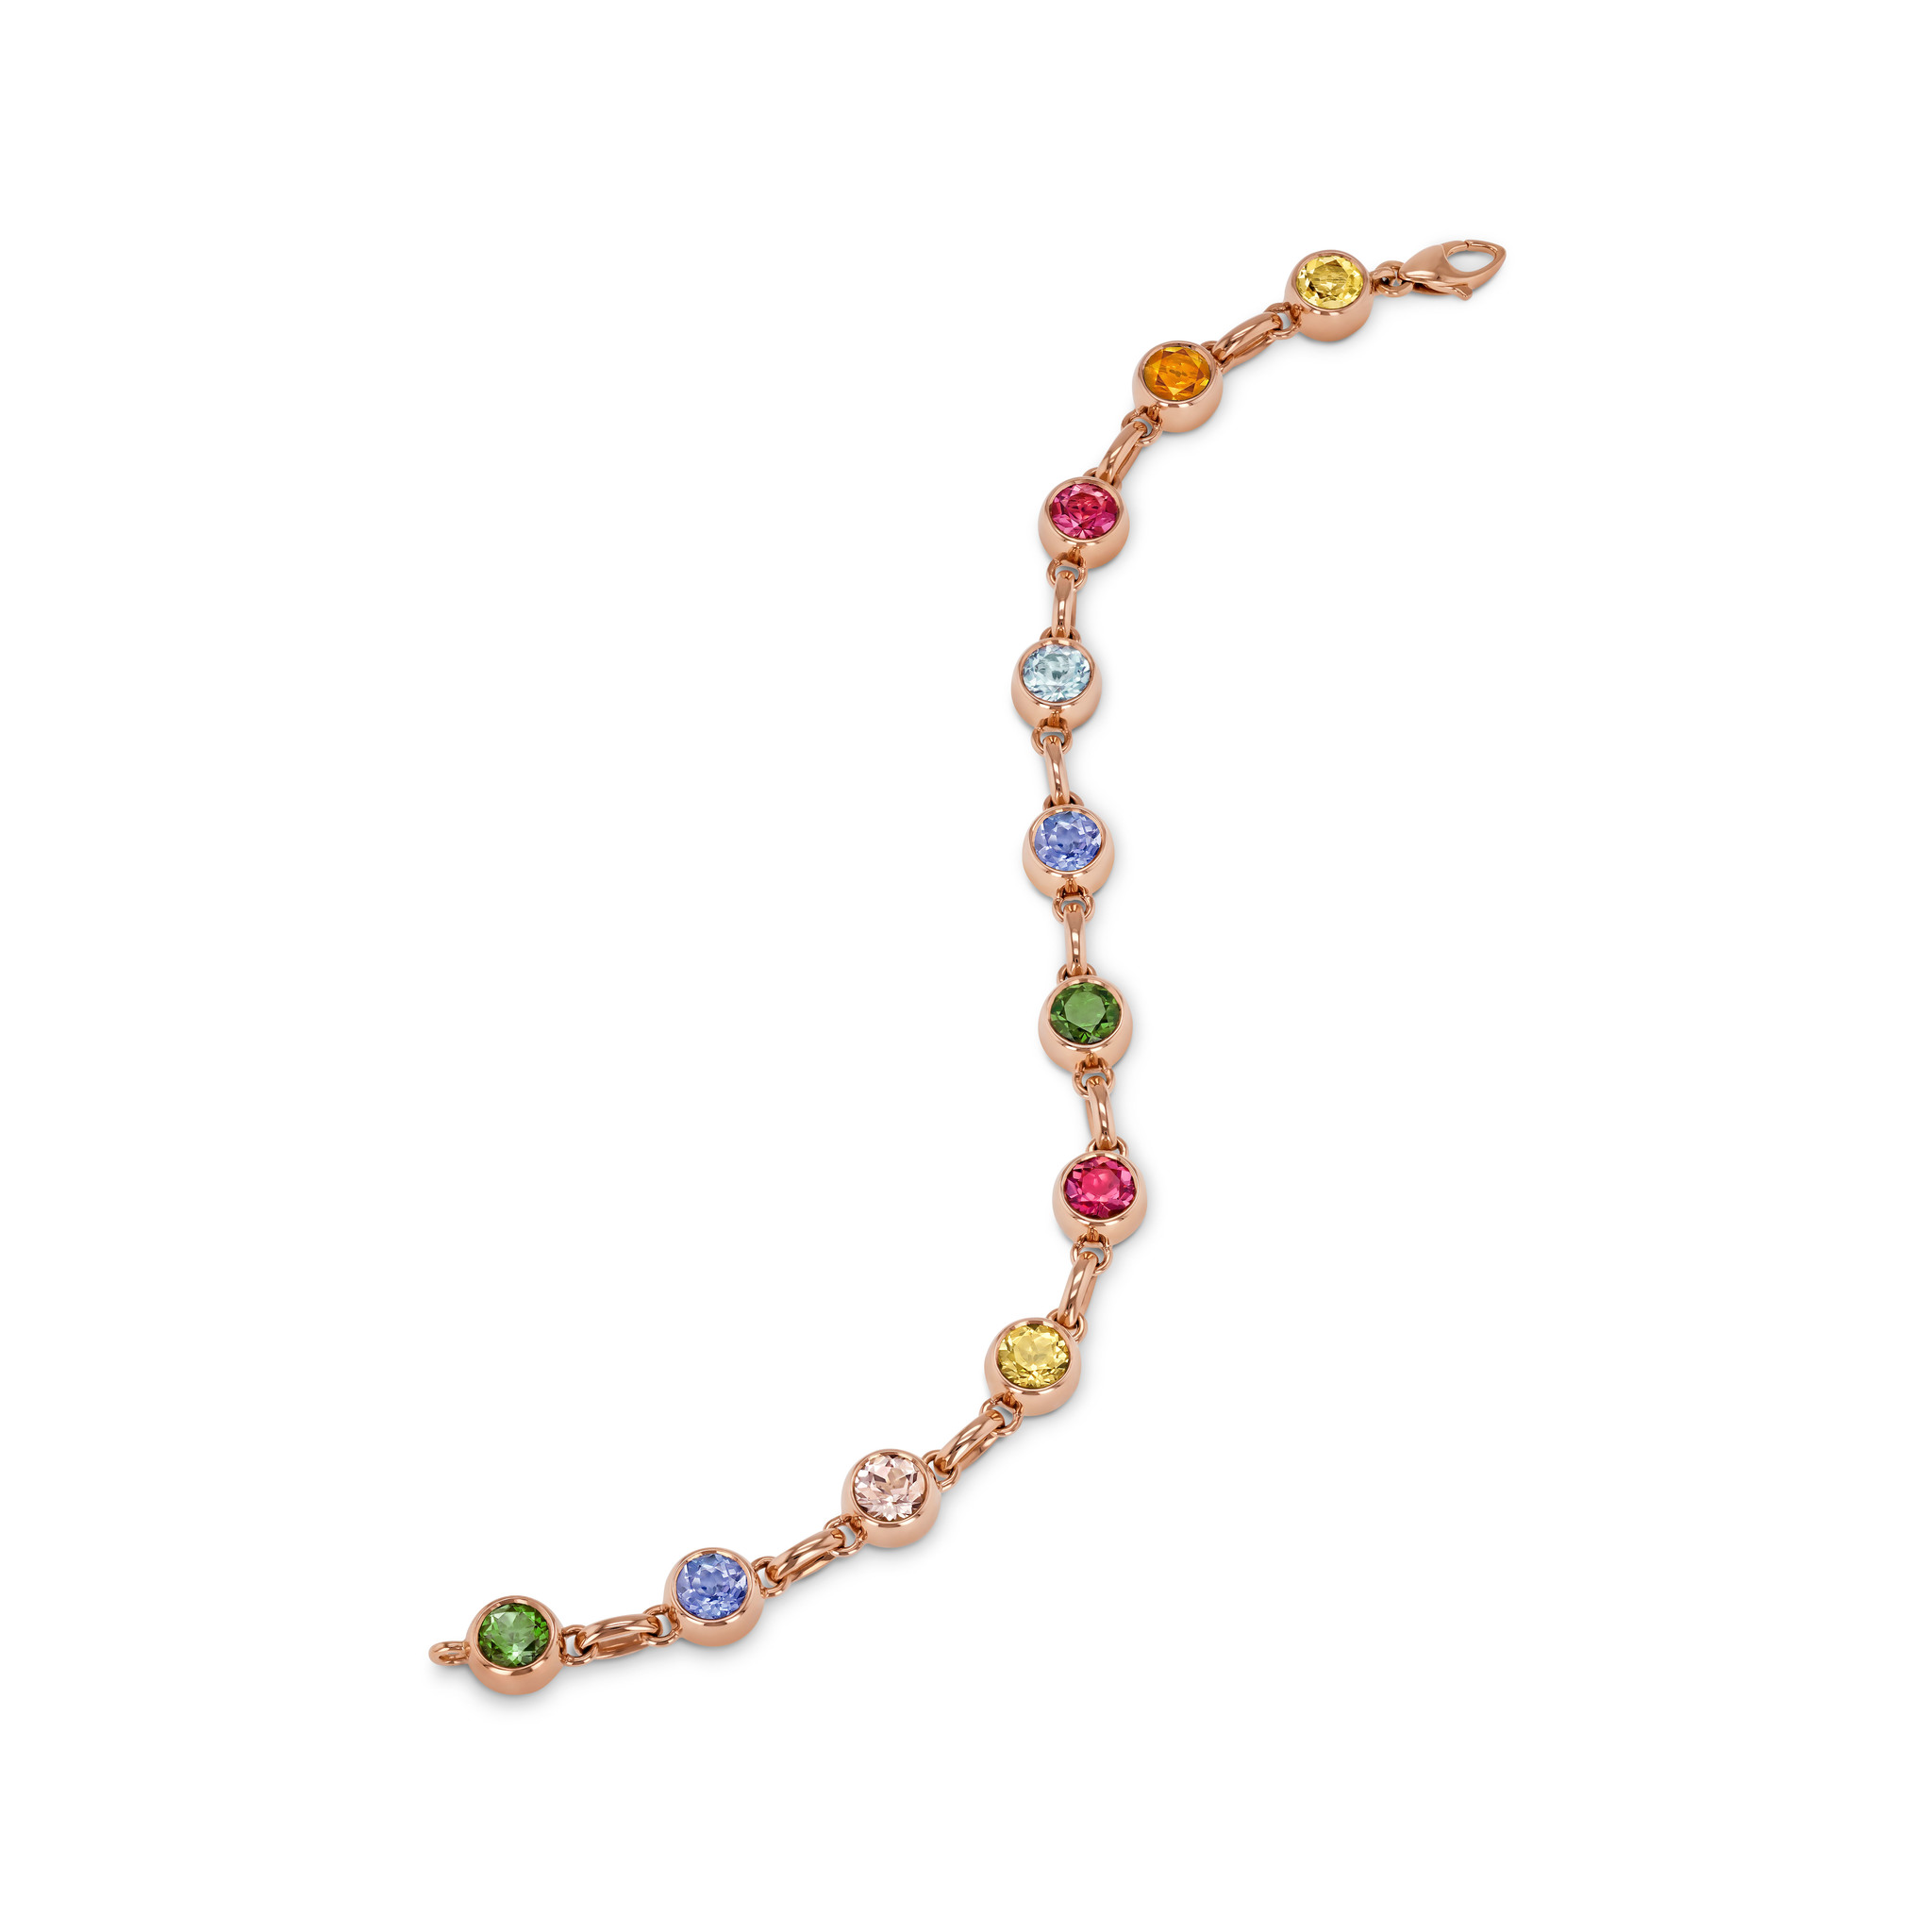 Bracelet with coloured gemstones